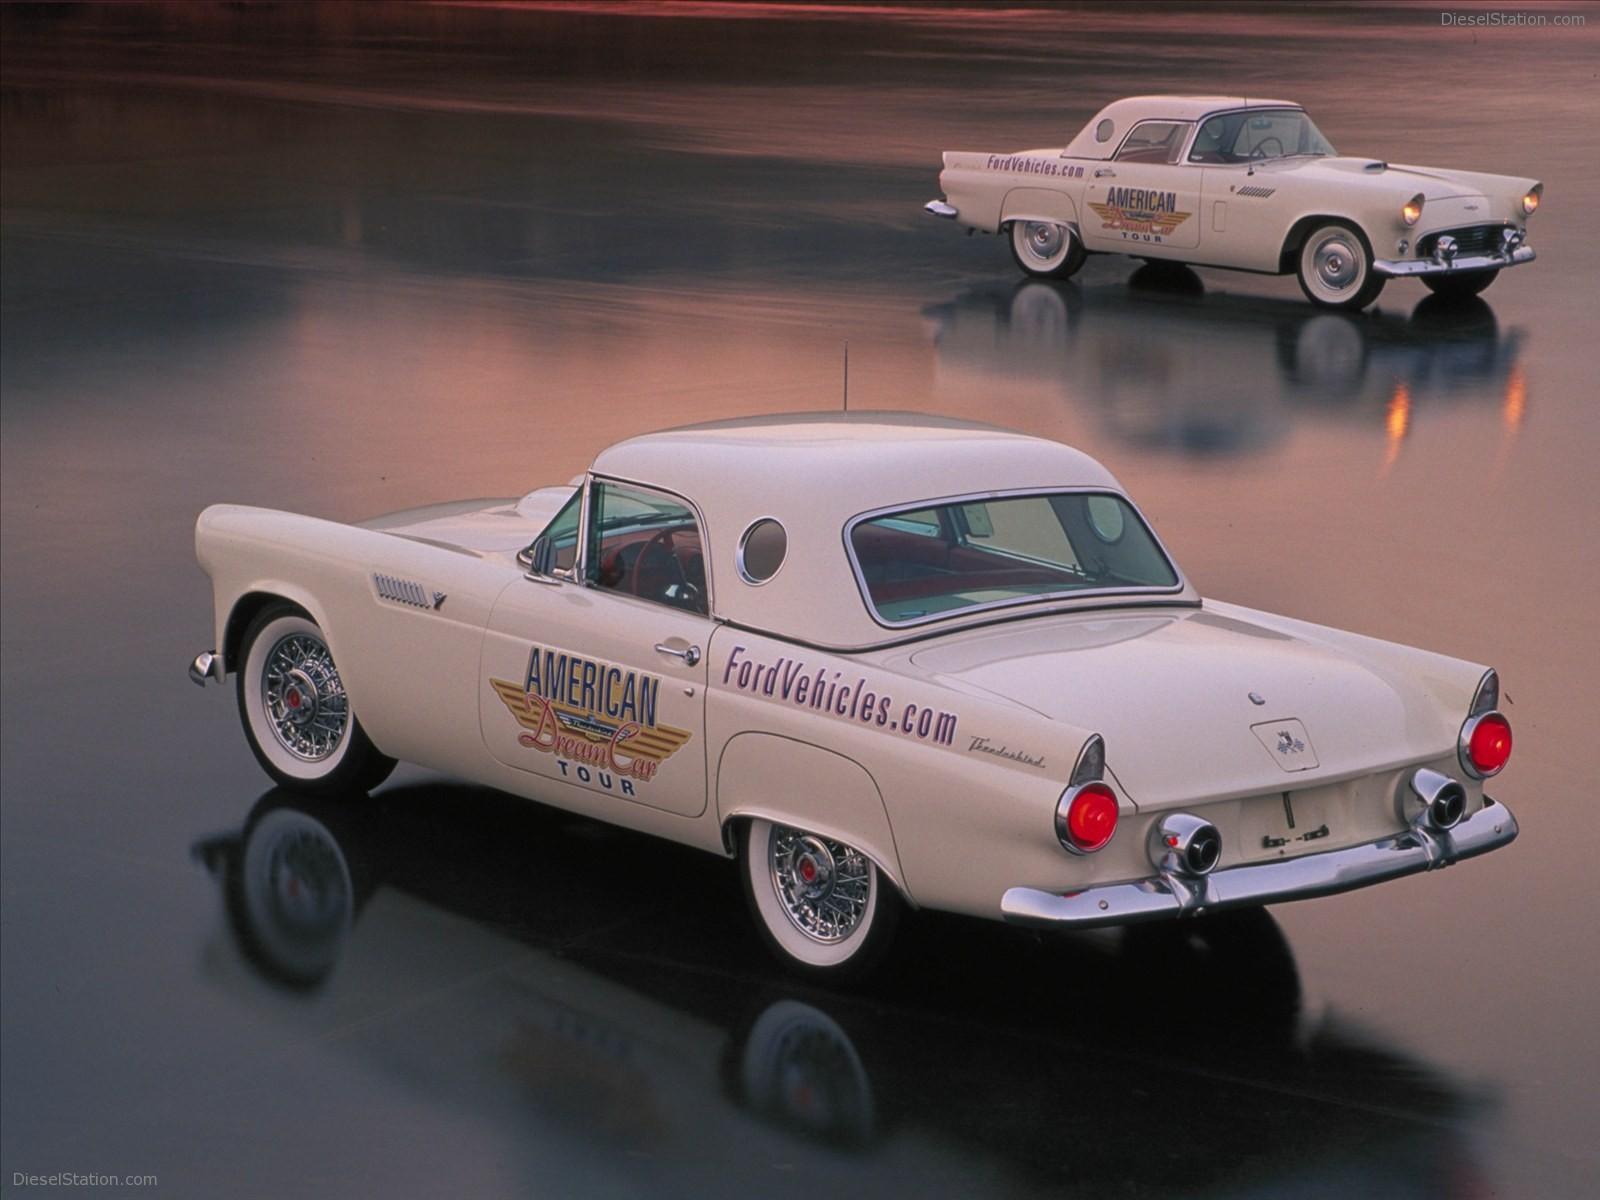 Ford Thunderbird 1956 American Dream Car